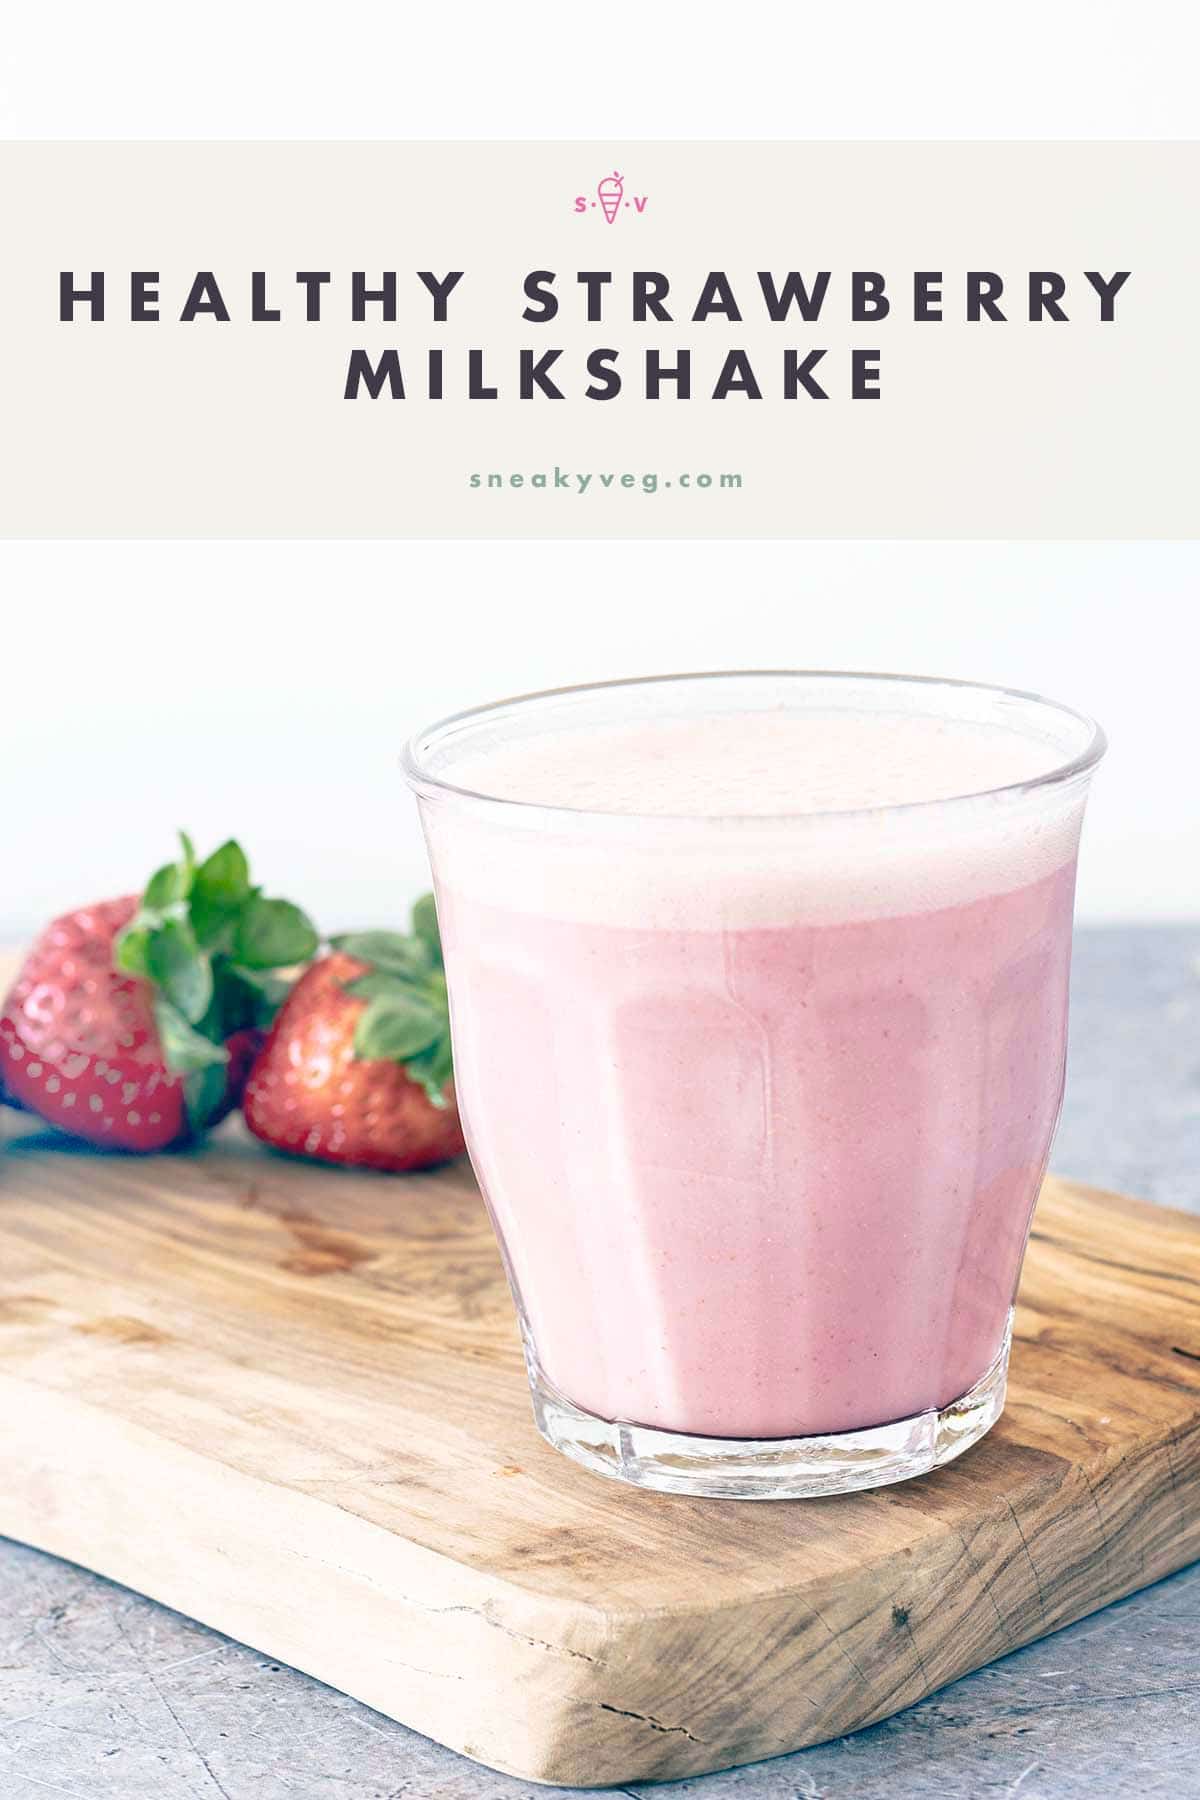 strawberry milkshake in glass